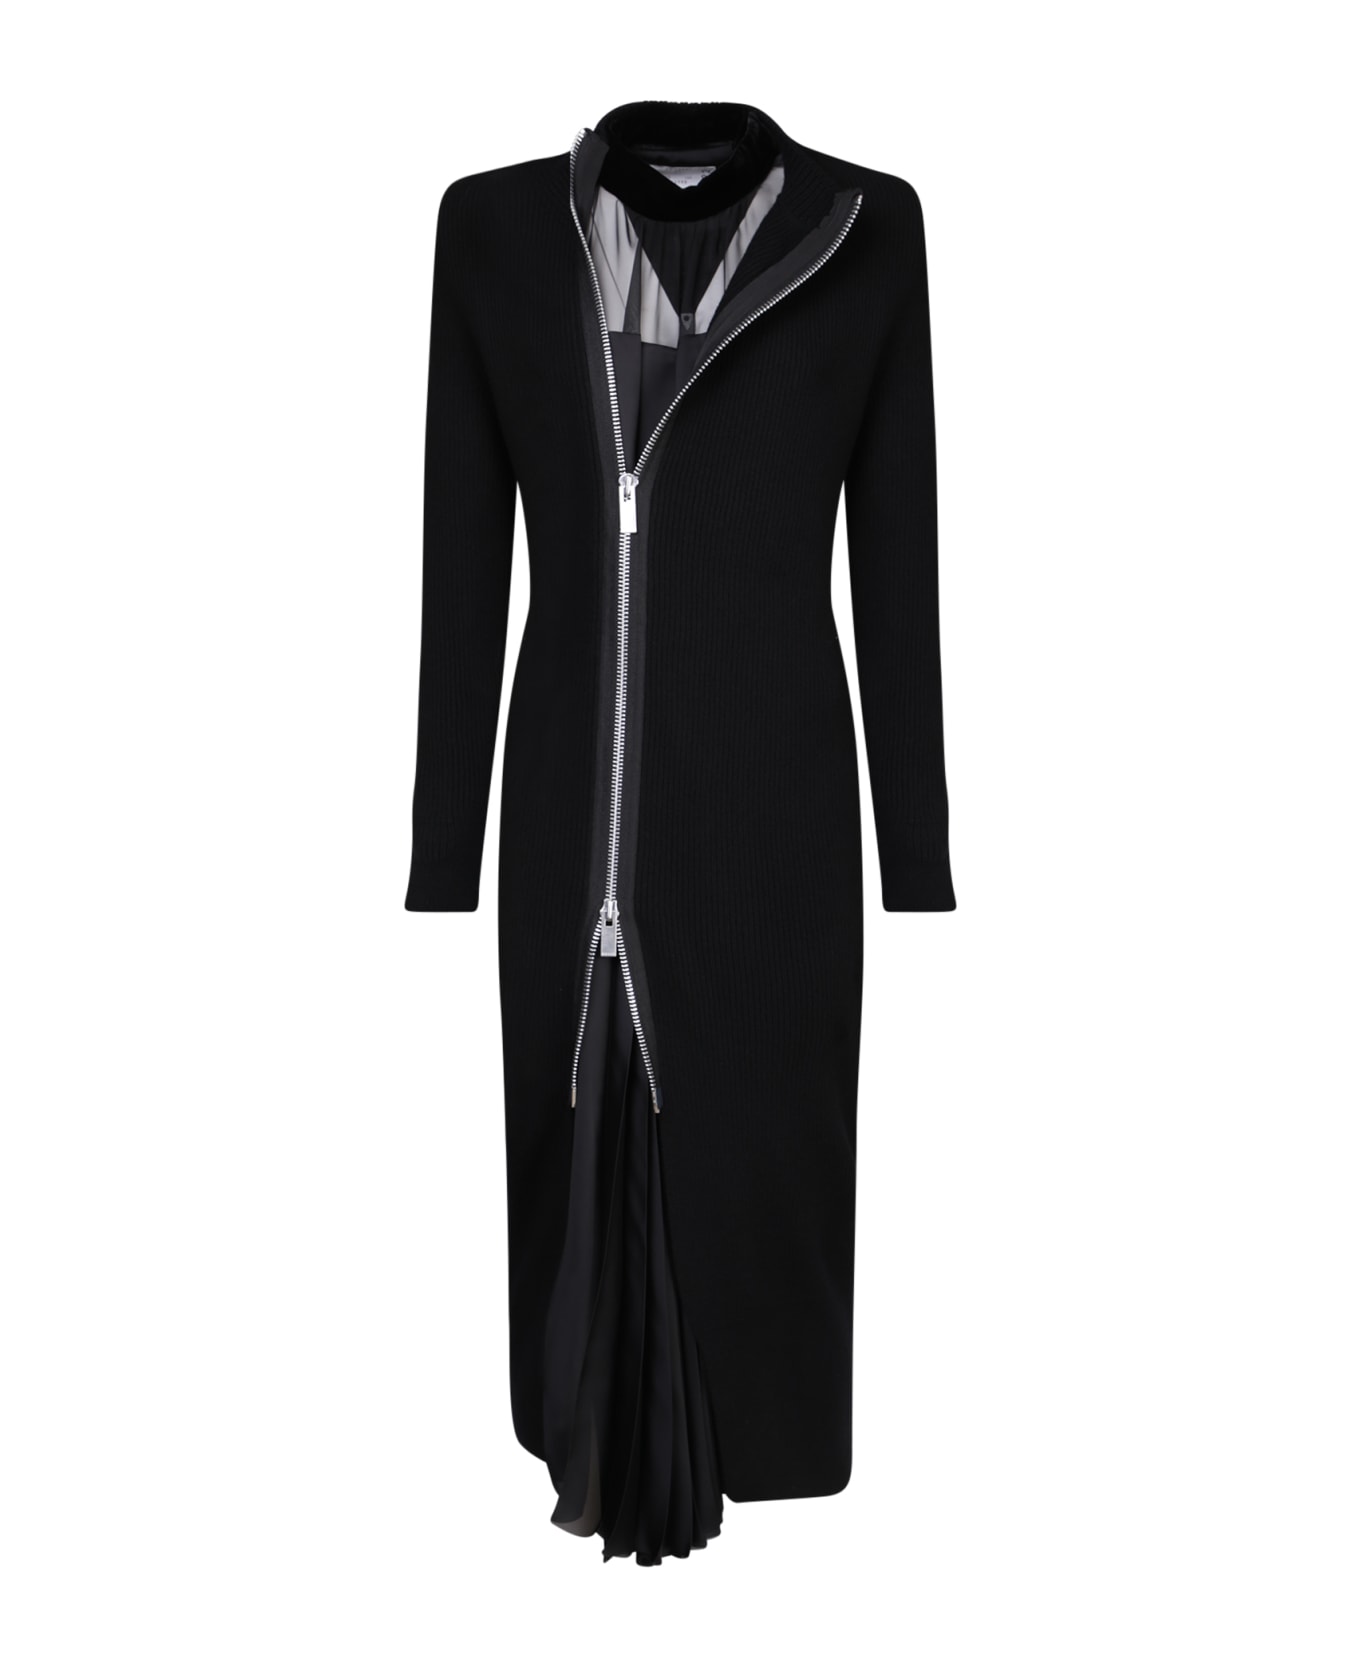 Sacai Cardigan Black Dress - Black